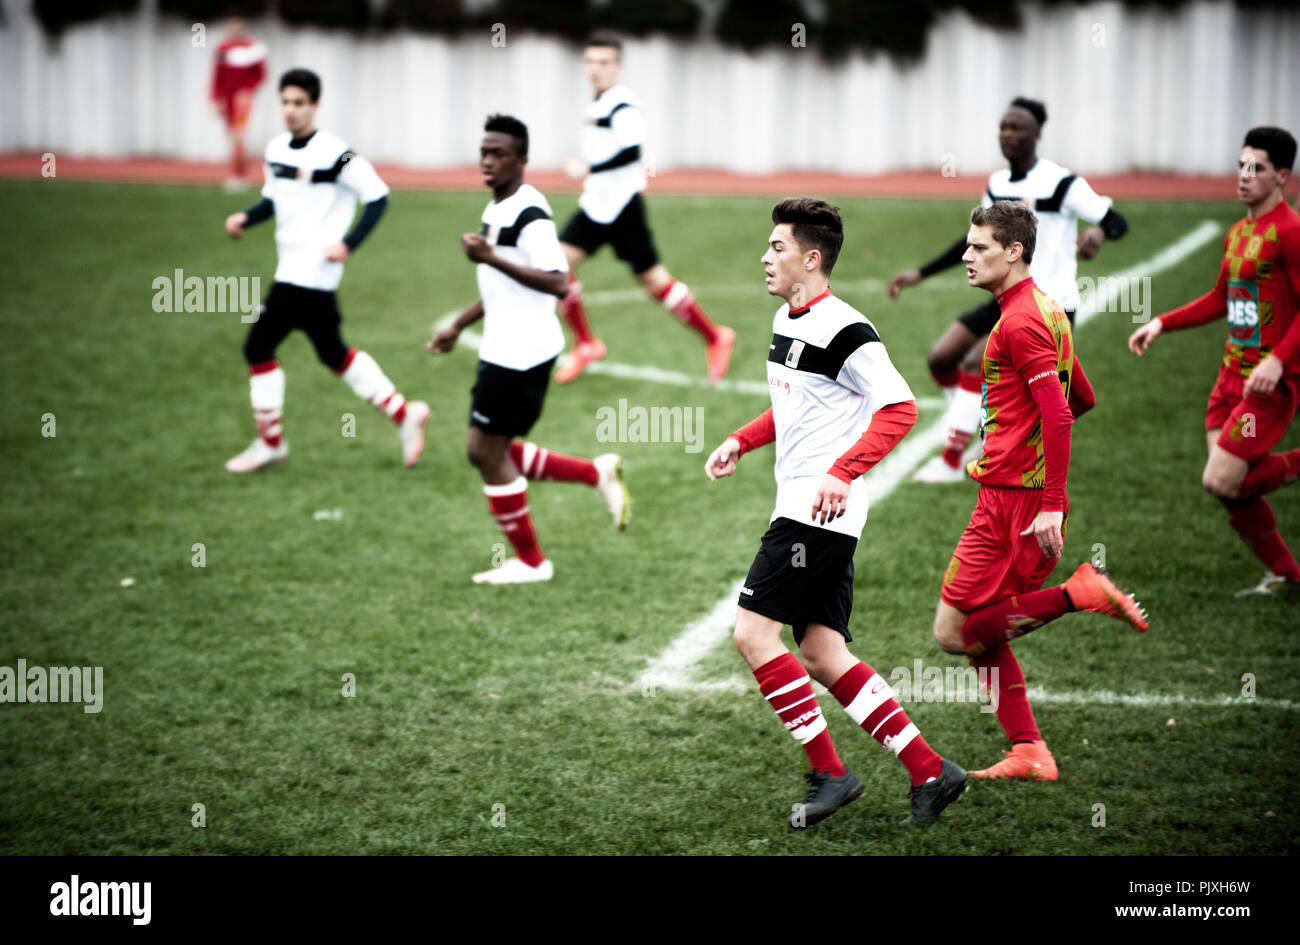 La partita di calcio tra le promesse di RWD Molenbeek e KSV Bornem in Sippelberg football Stadium di Molenbeek-Saint-Jean, Bruxelles (Belgio, Foto Stock